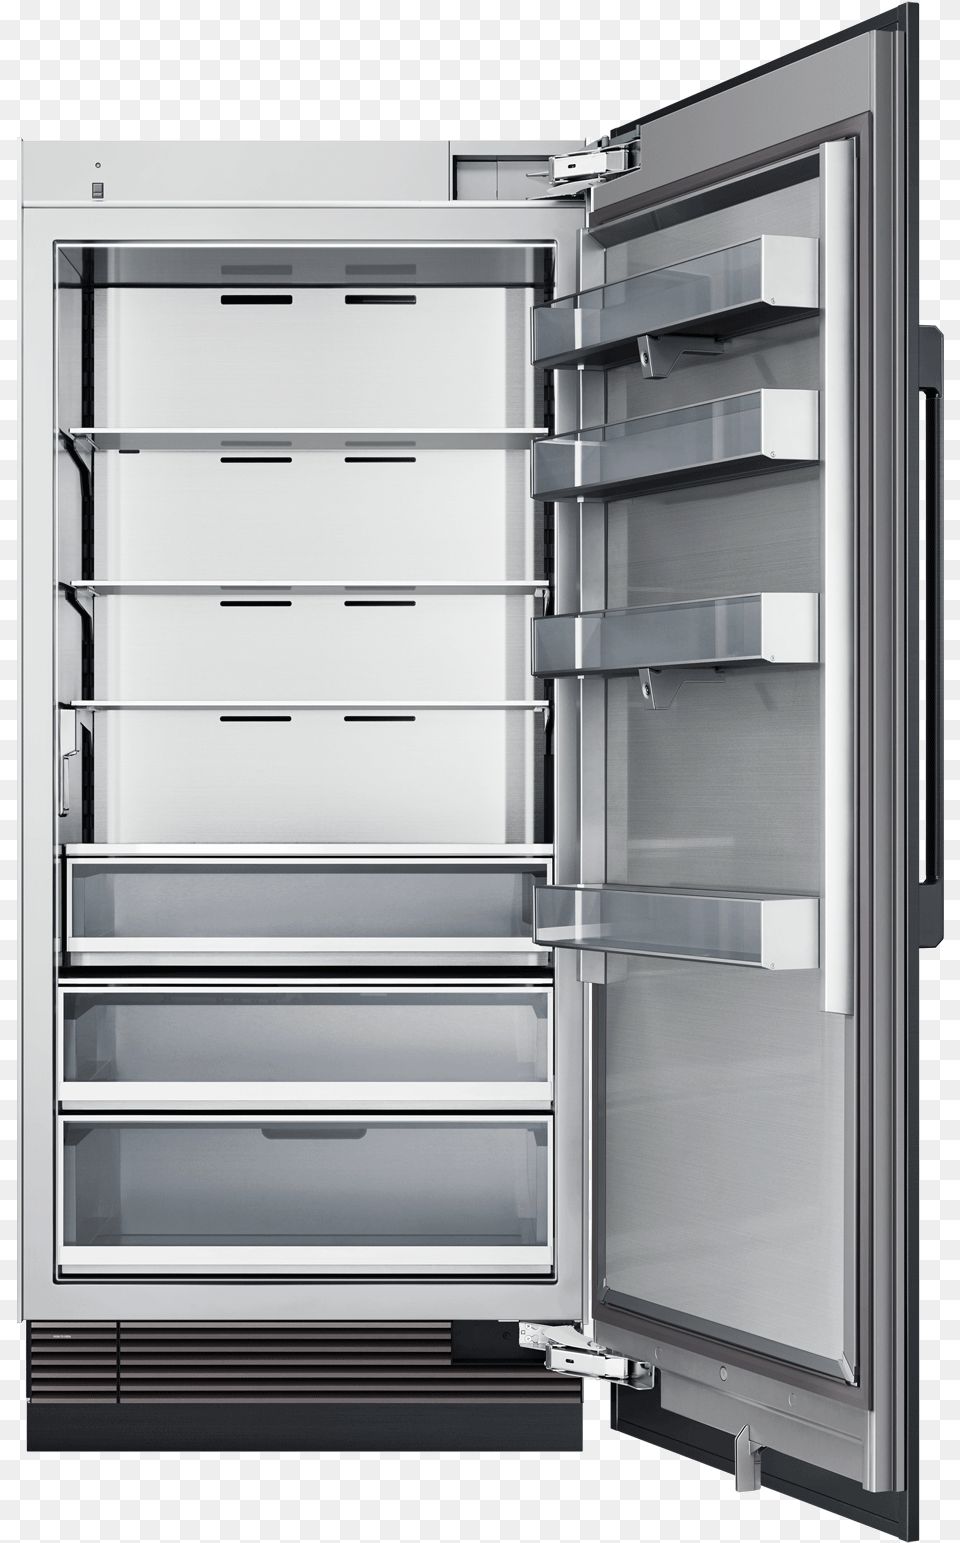 Refrigerador 36 Dacor, Device, Appliance, Electrical Device, Refrigerator Png Image